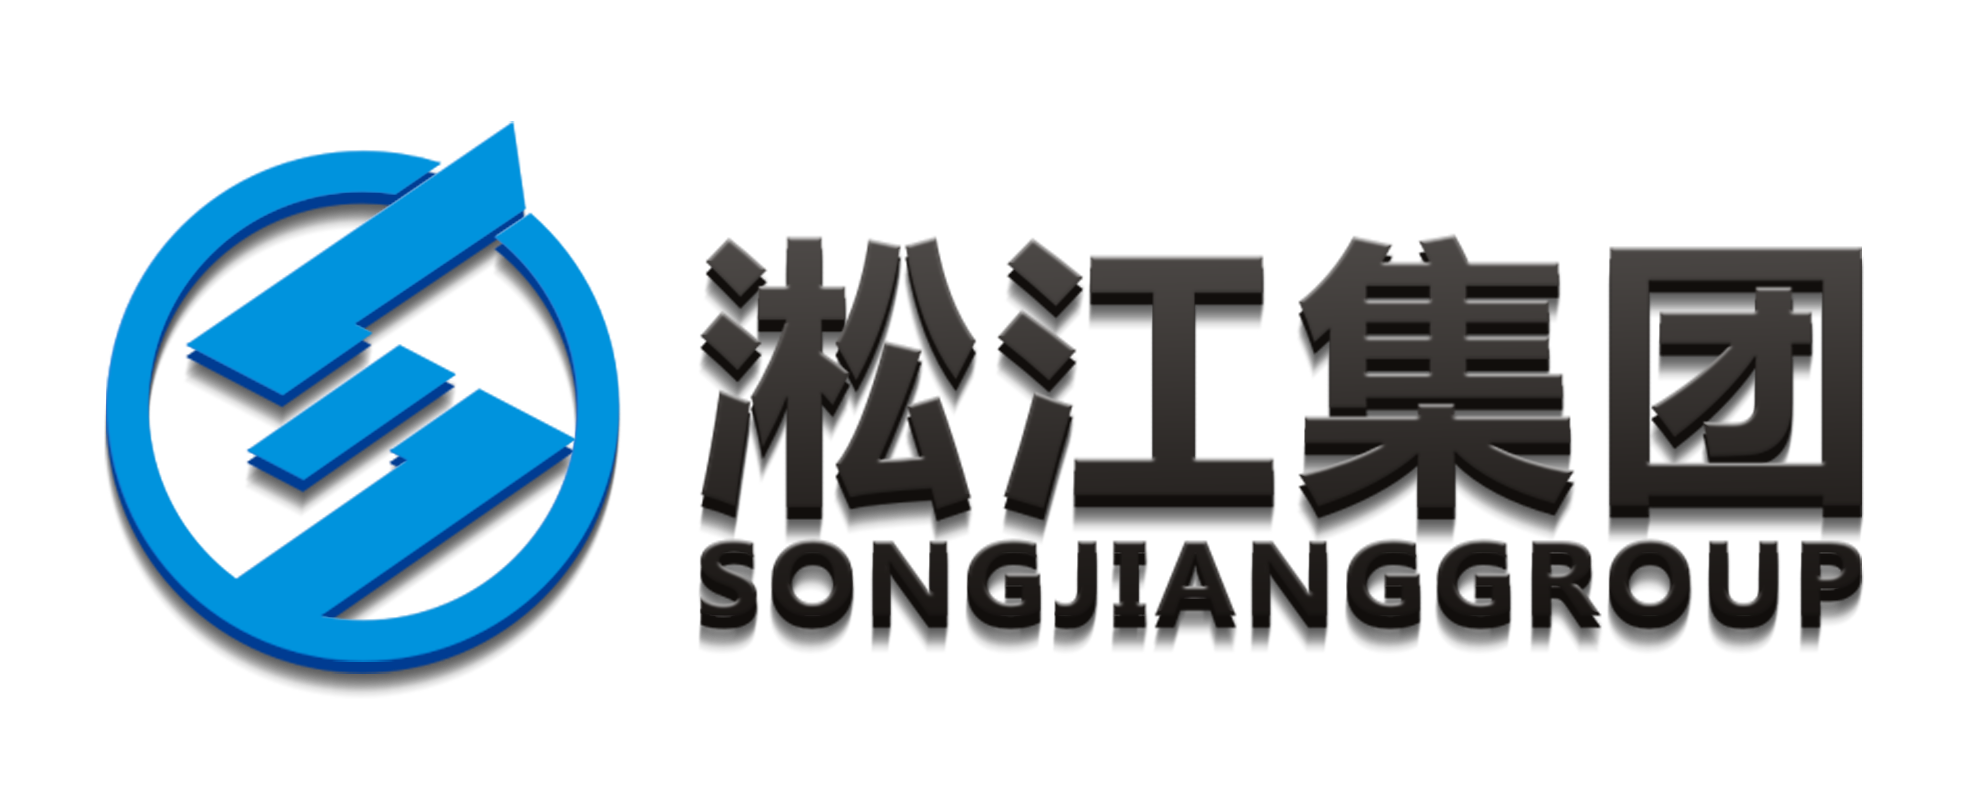 Songjiang group